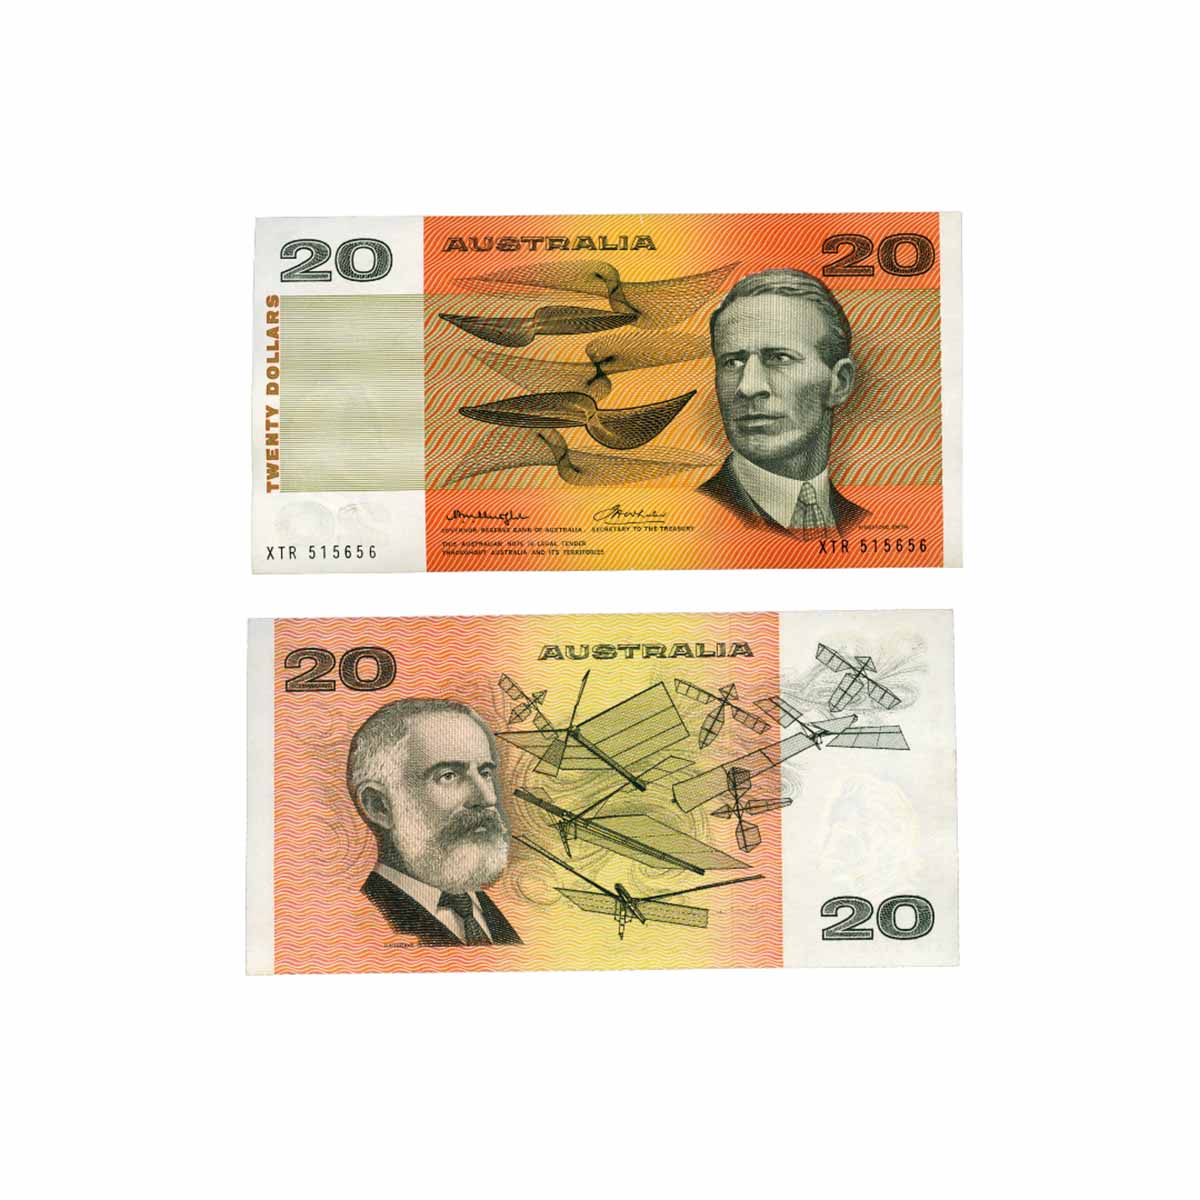 1976 $20 R406a Knight/Wheeler Centre Thread Banknote Uncirculated